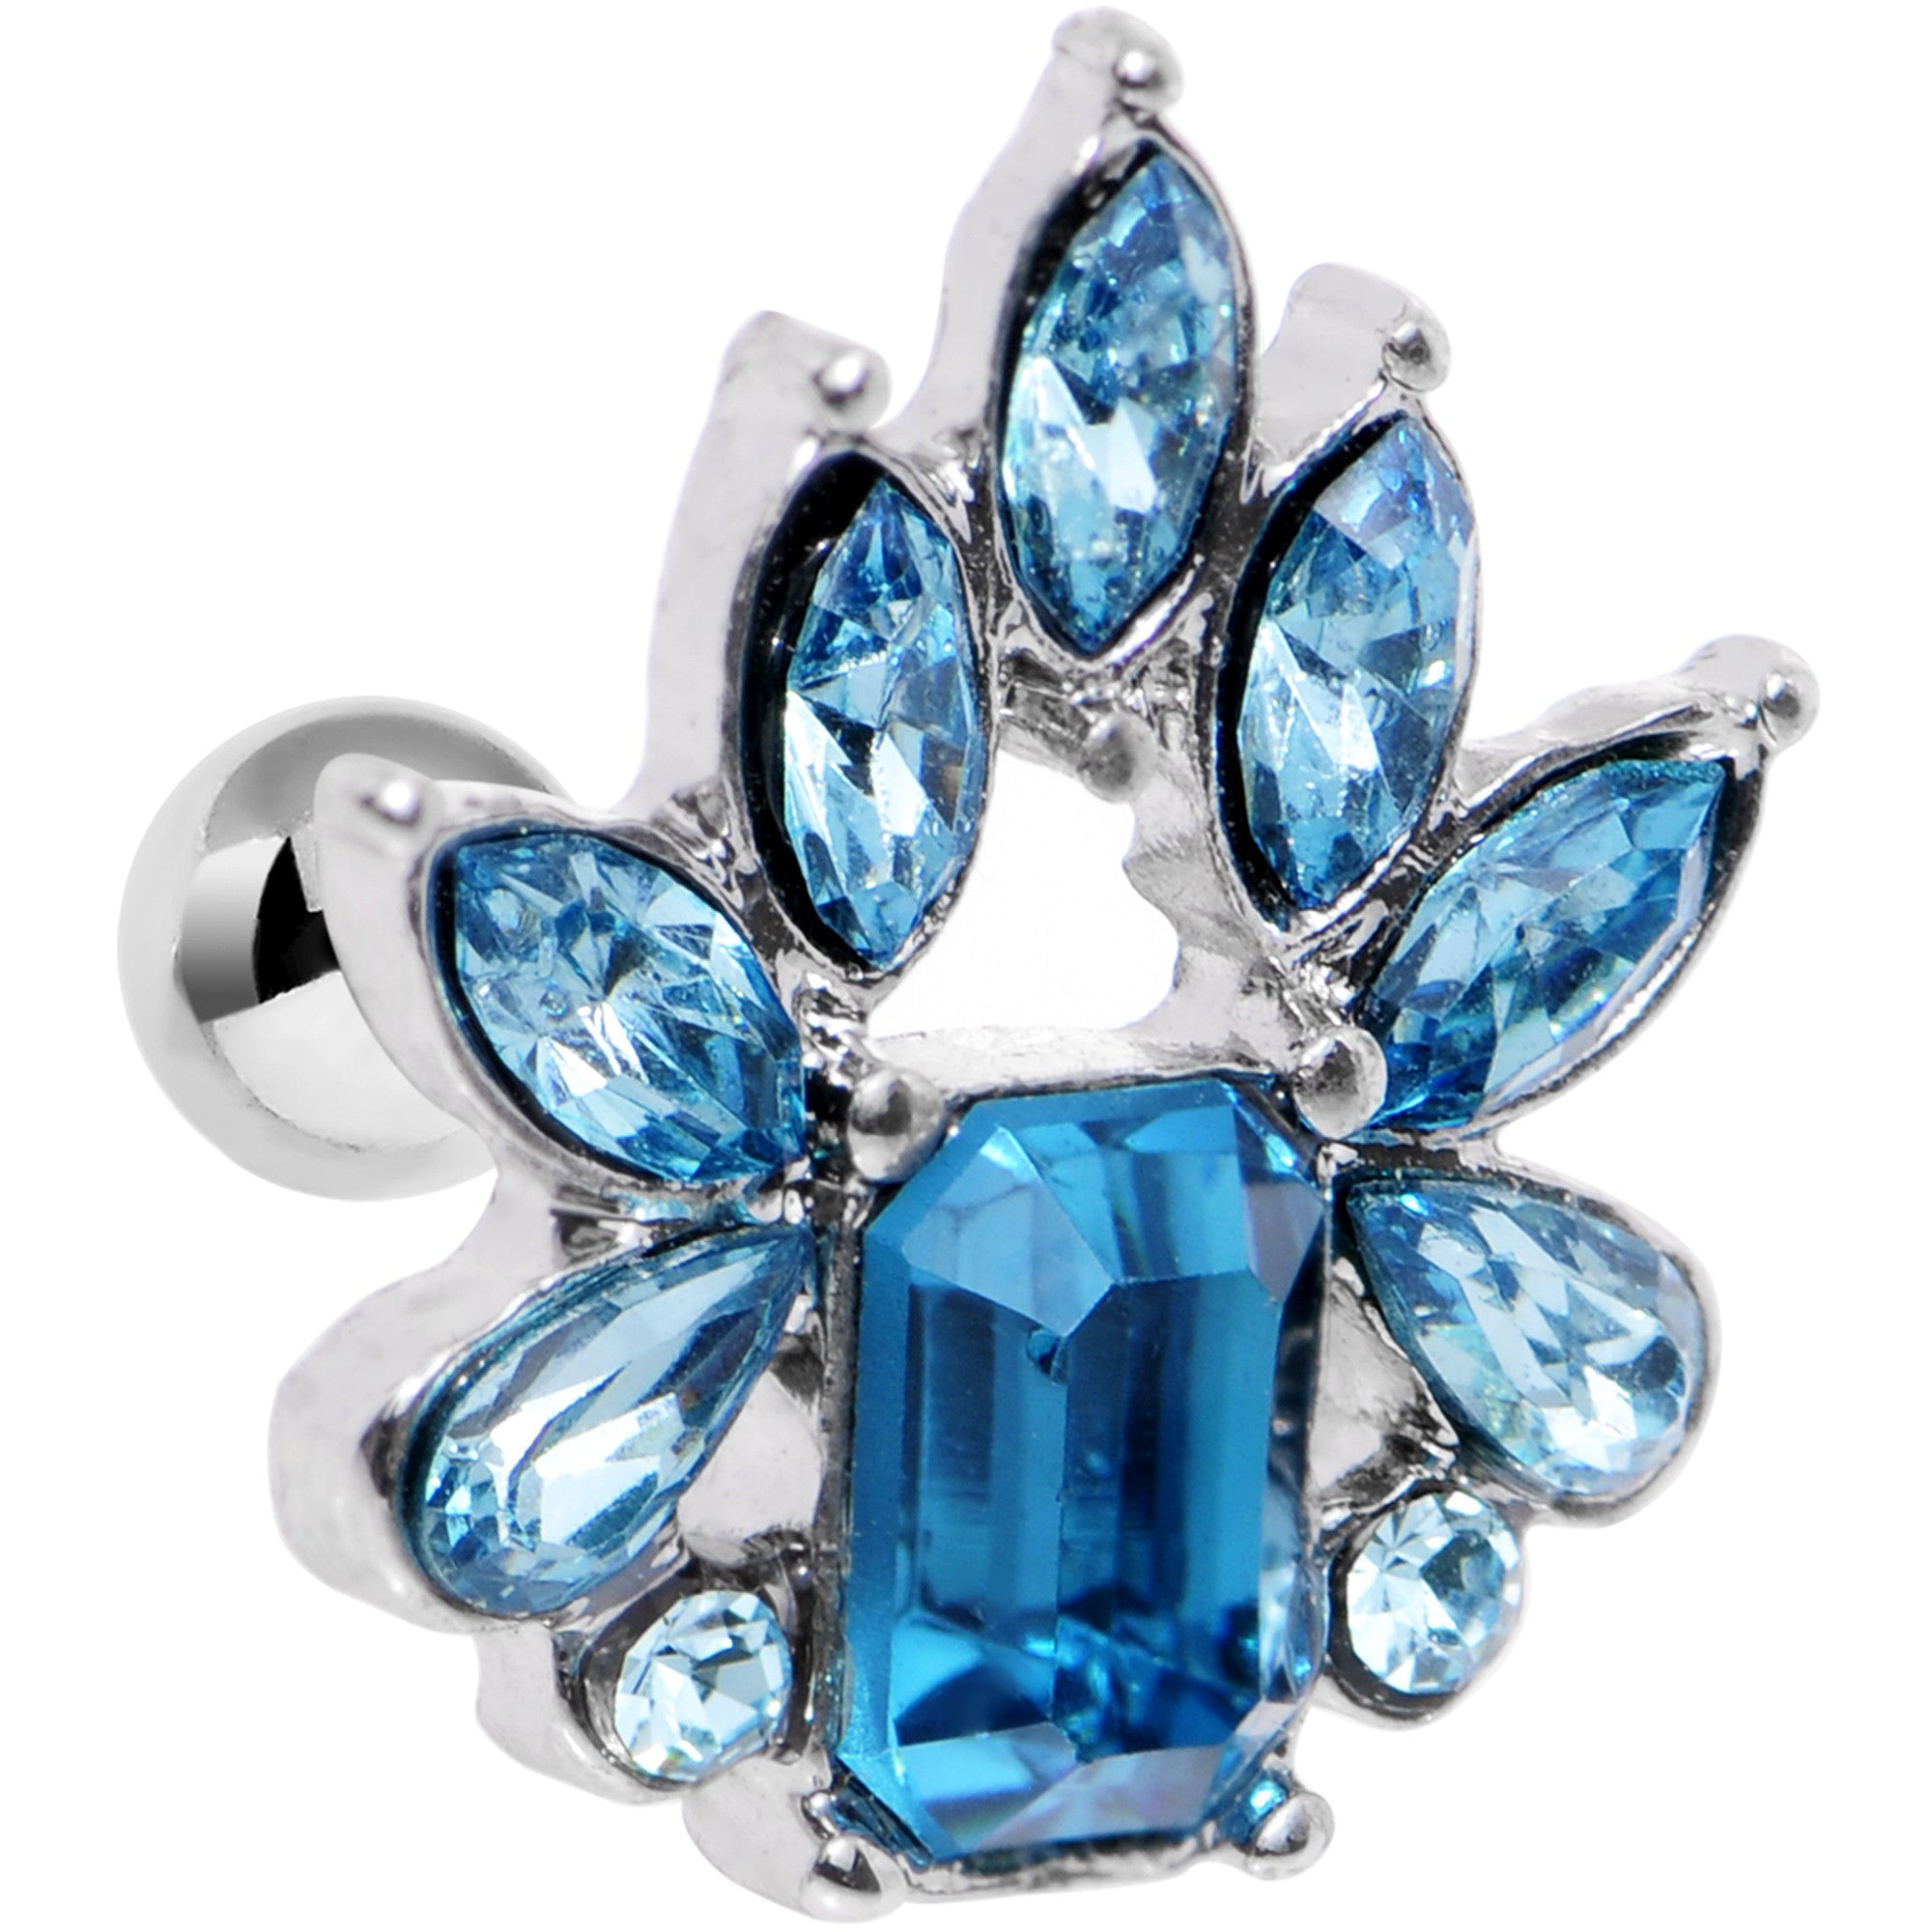 16 Gauge 1/4 Blue Gem Flower Tiara Amulet Cartilage Tragus Earring